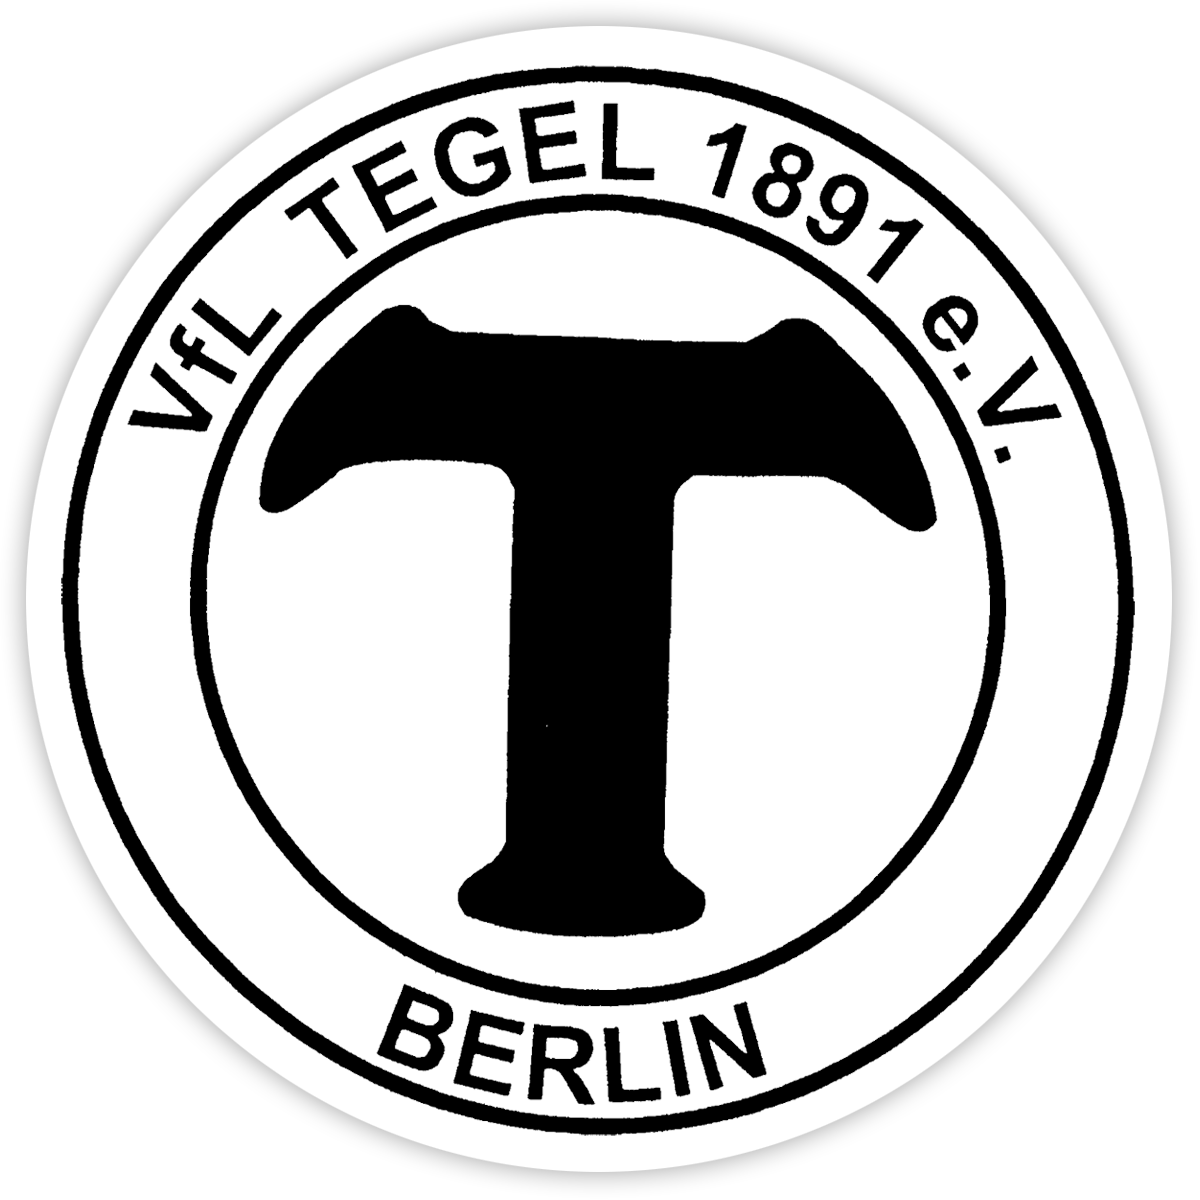 VfL Tegel 1891 e.V.